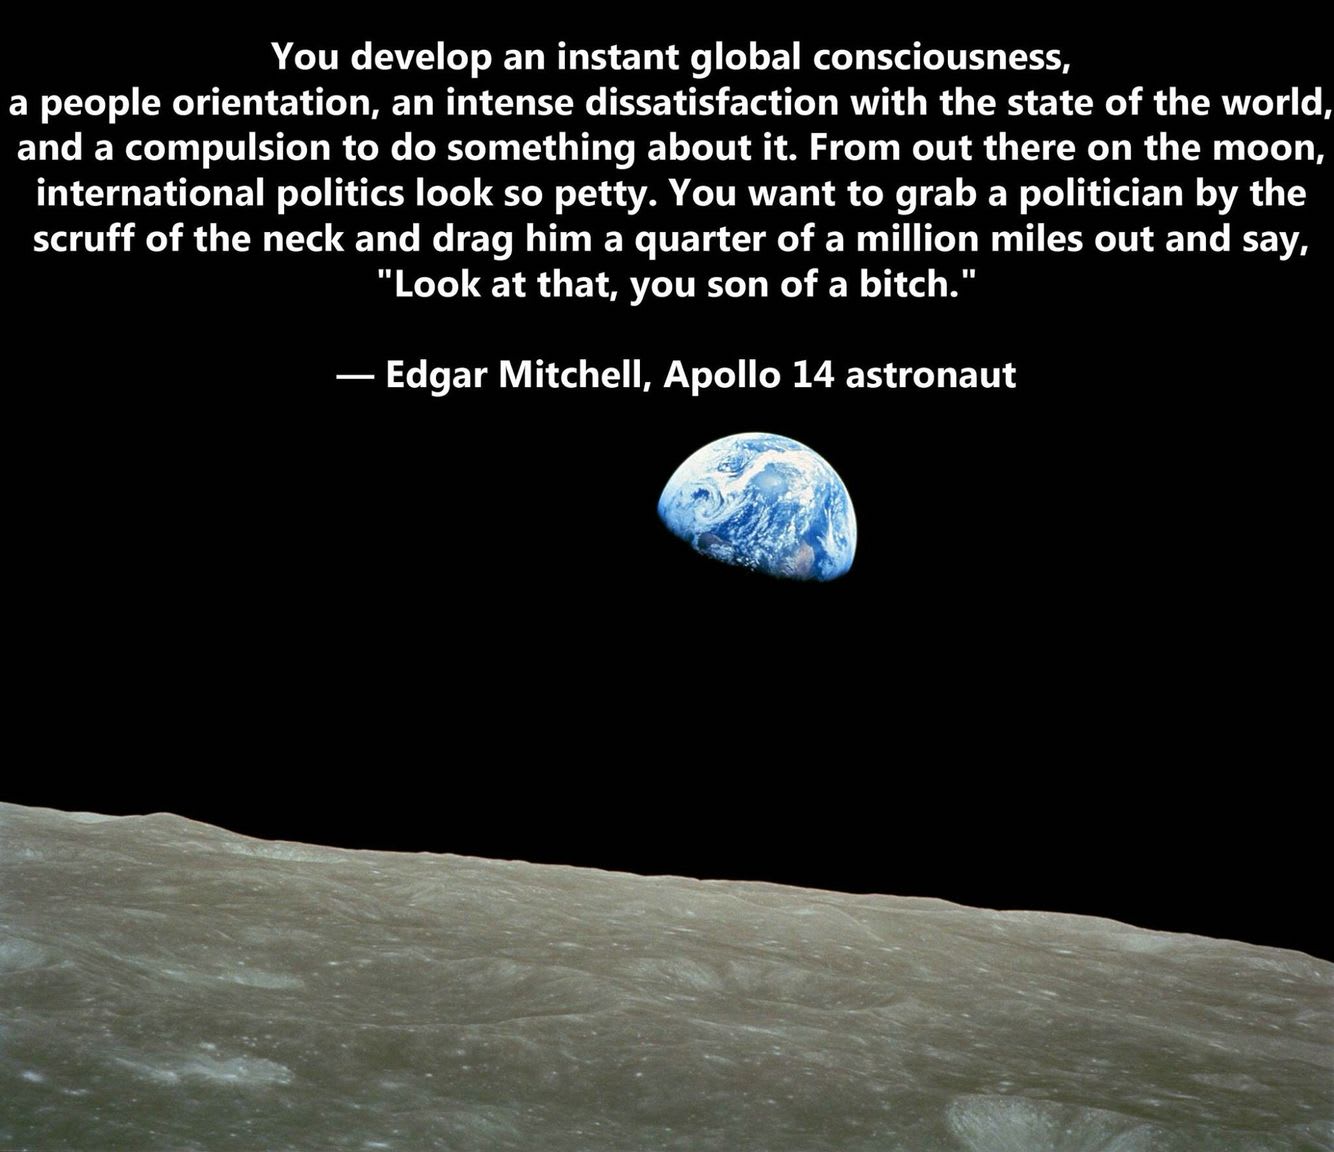 Edgar Mitchell - the sixth man to walk on the moon - died yesterday, aged 85. | Politics, International politics, Moon